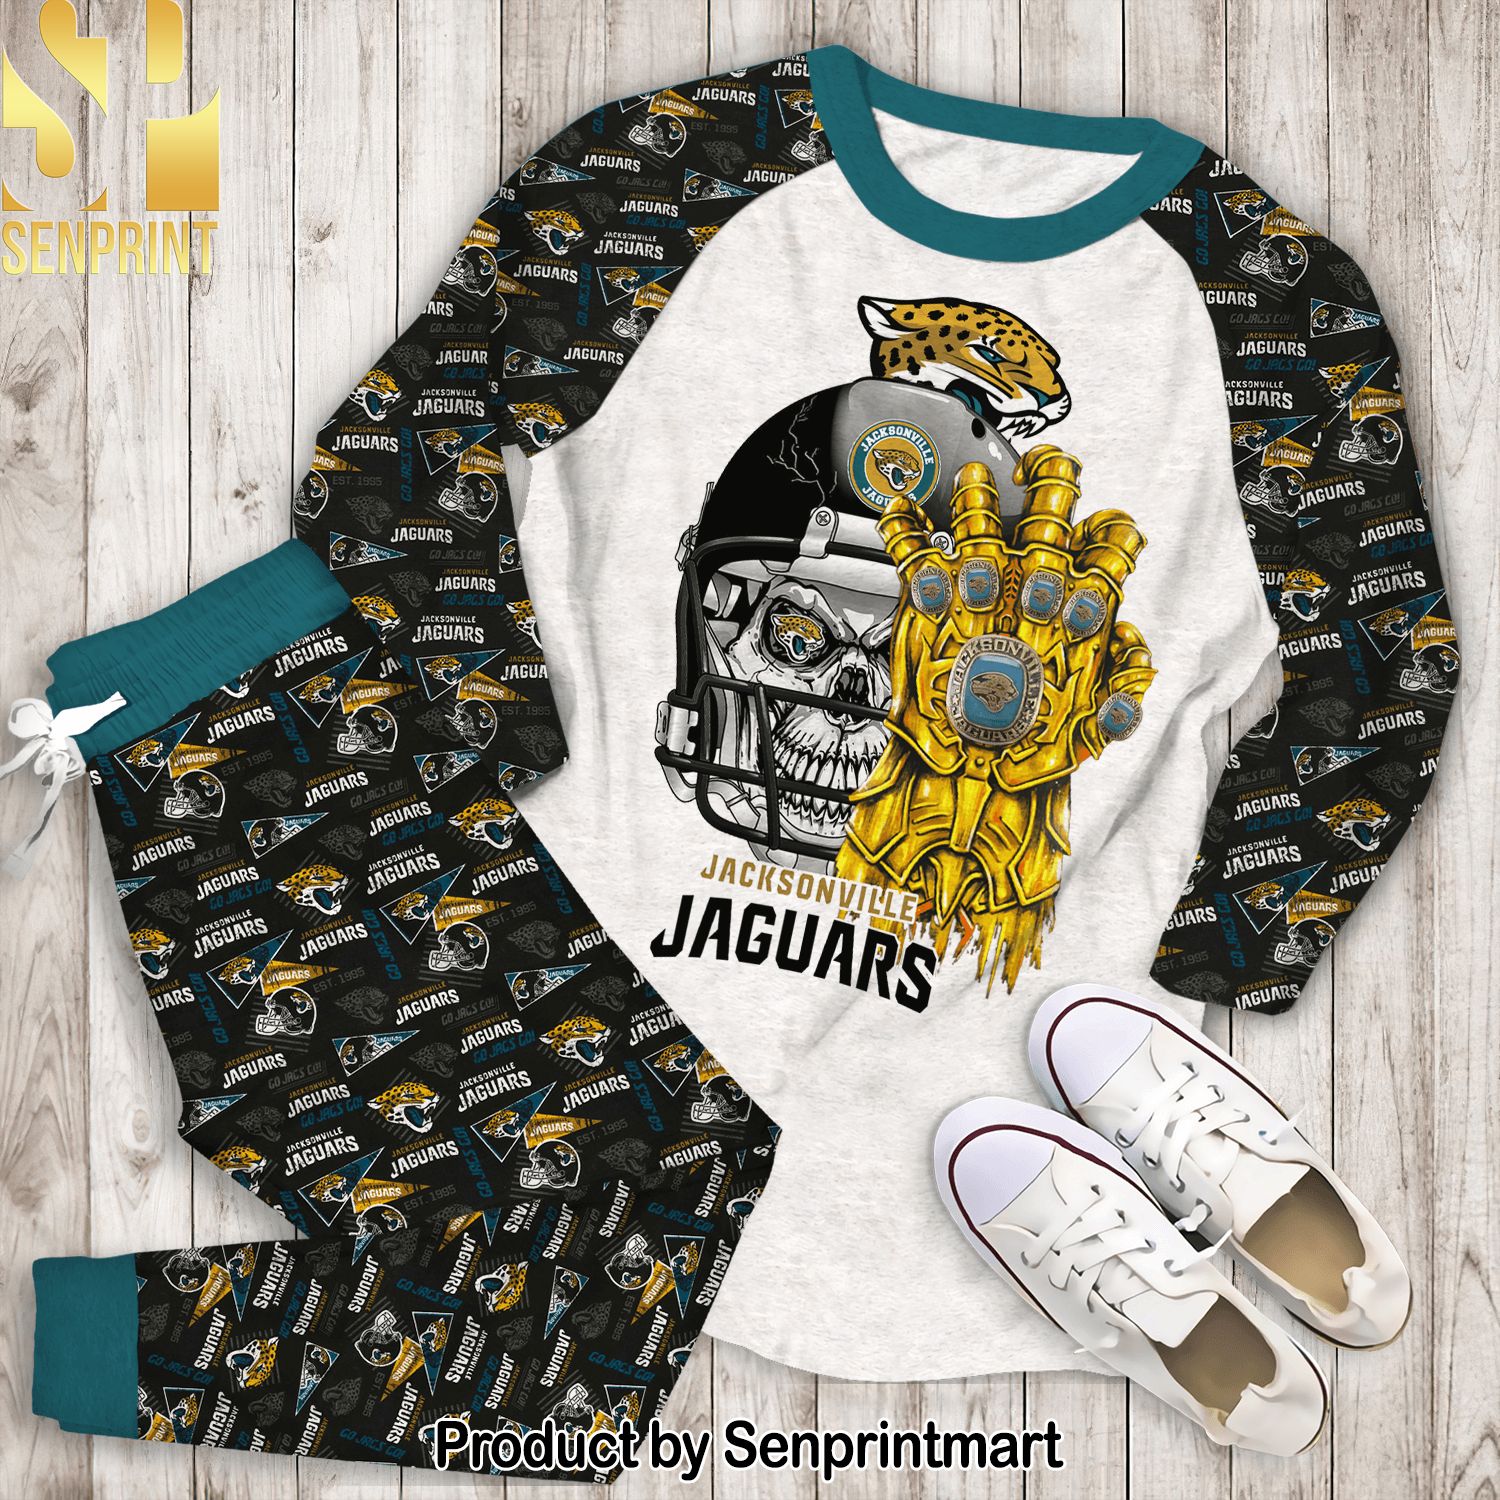 World Champion Jacksonville Jaguars Awesome Outfit Pajamas Set